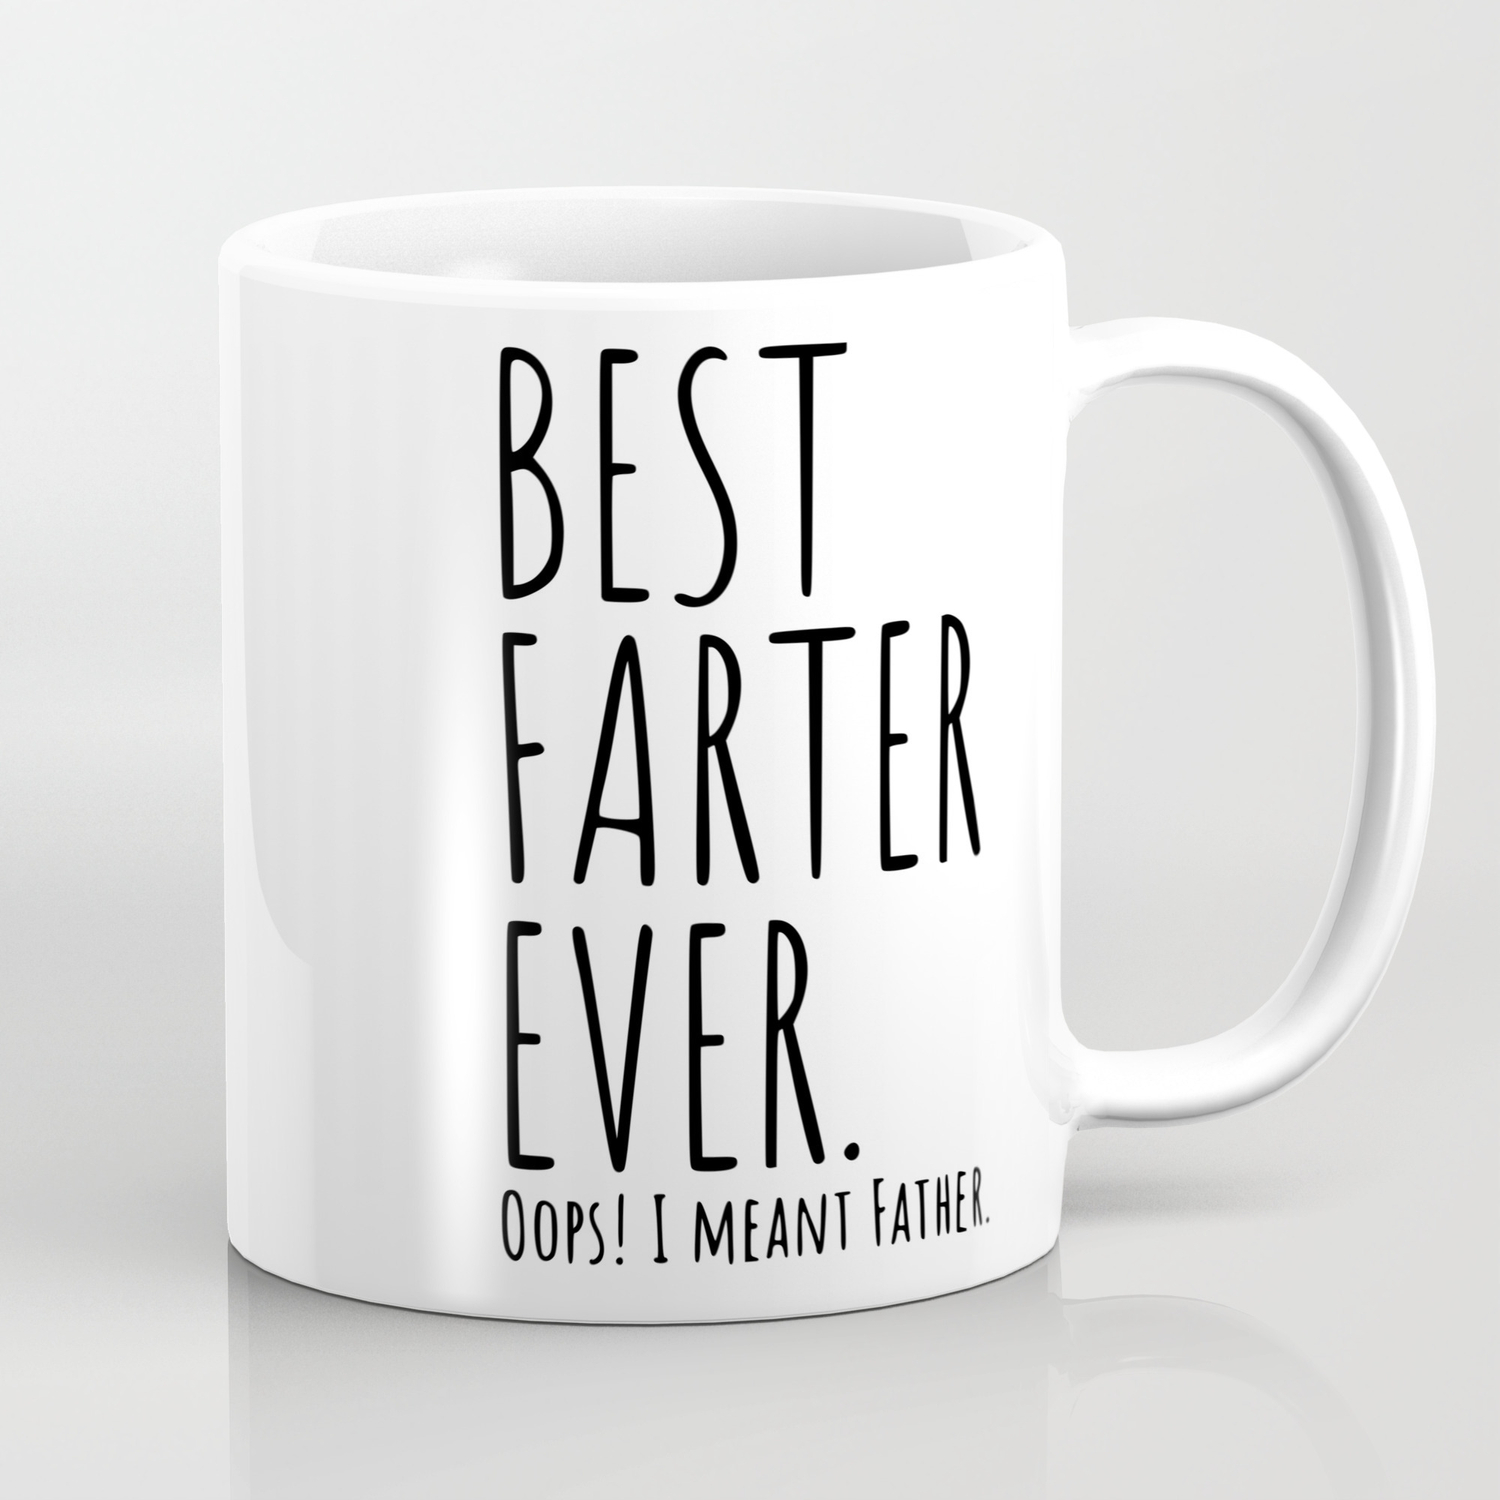 Details about   Best Farter Ever I Mean Father Ceramic Coffee Mug 11oz 